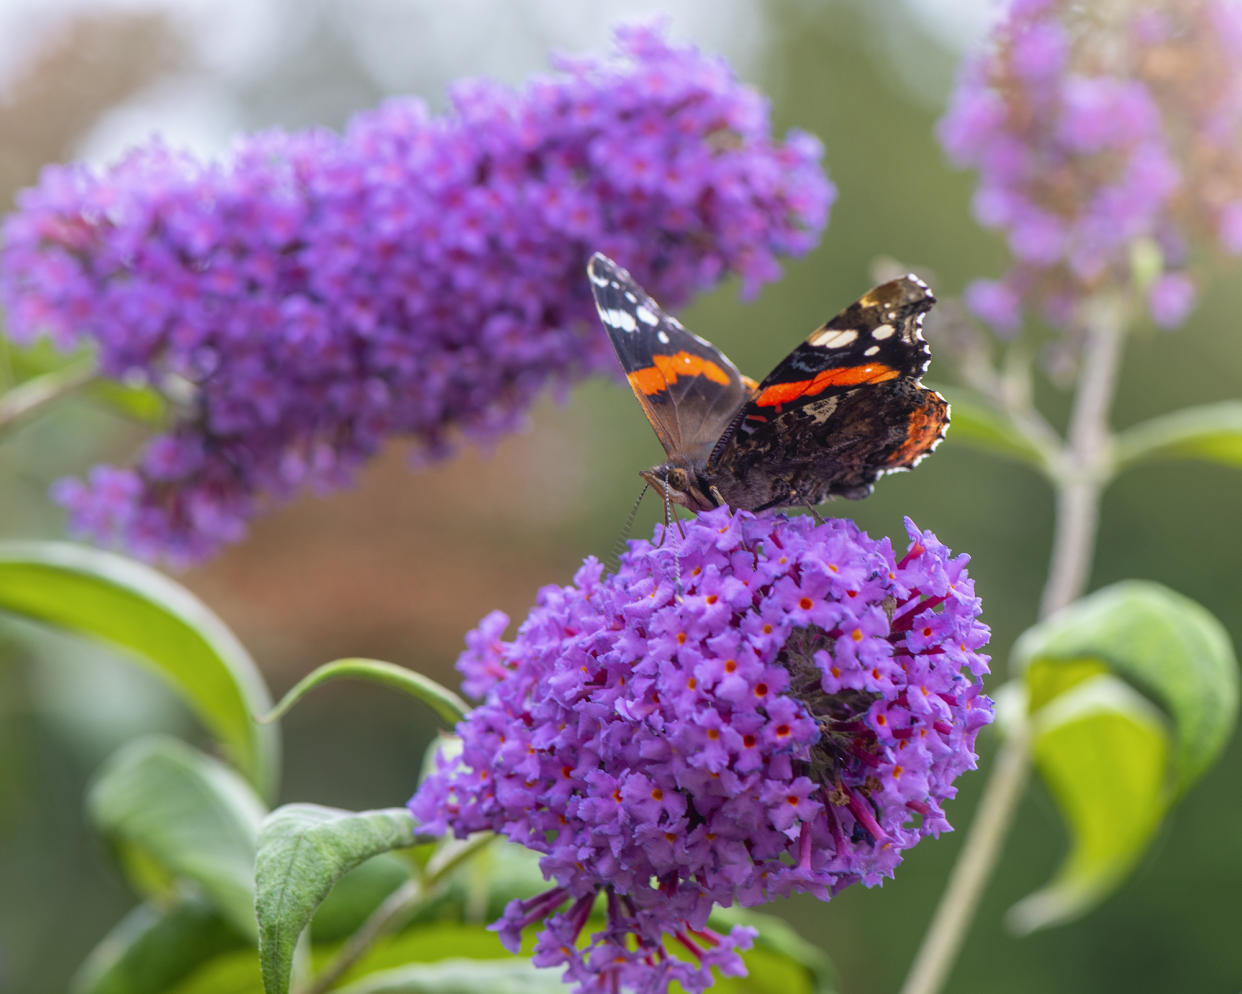  Butterfly lands on a purple flower of buddleia davidii - or butterfly bush. 